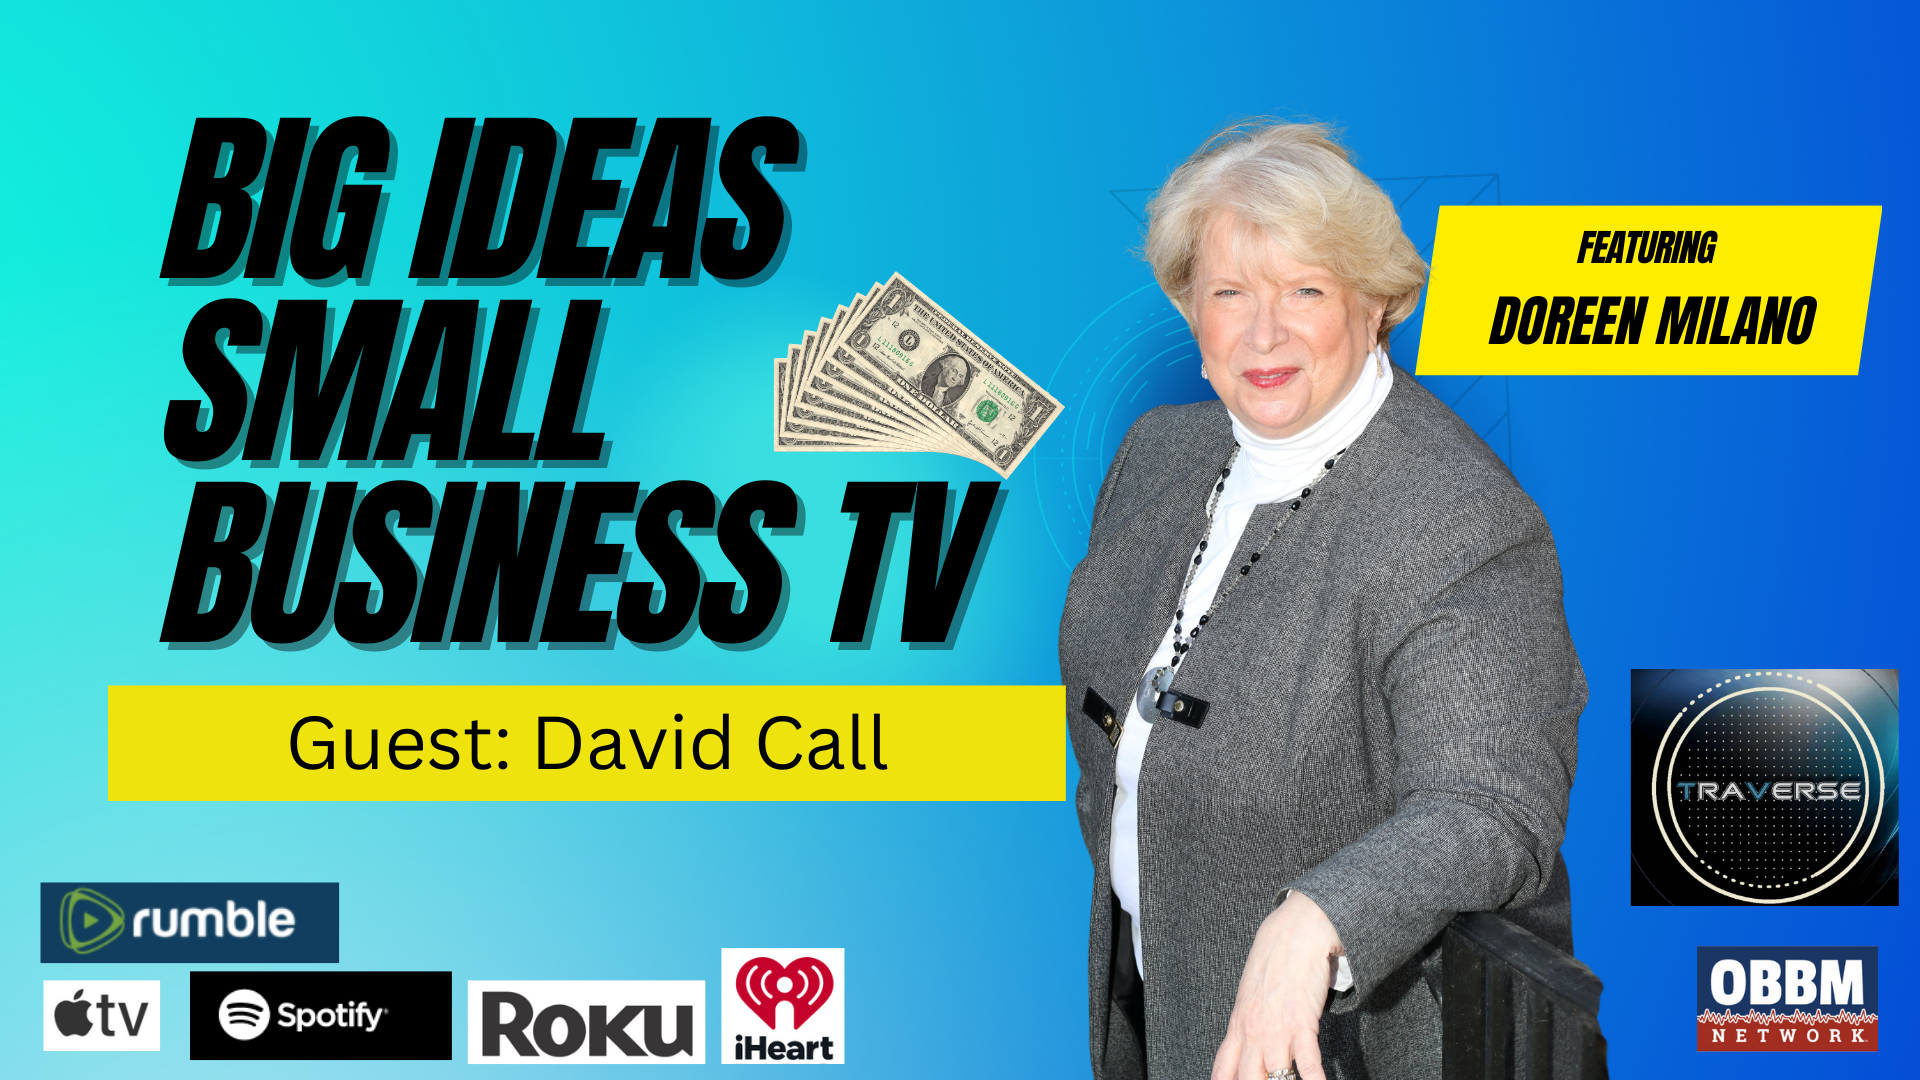 BISB03-David Call on Design - Big Ideas, Small Business TV